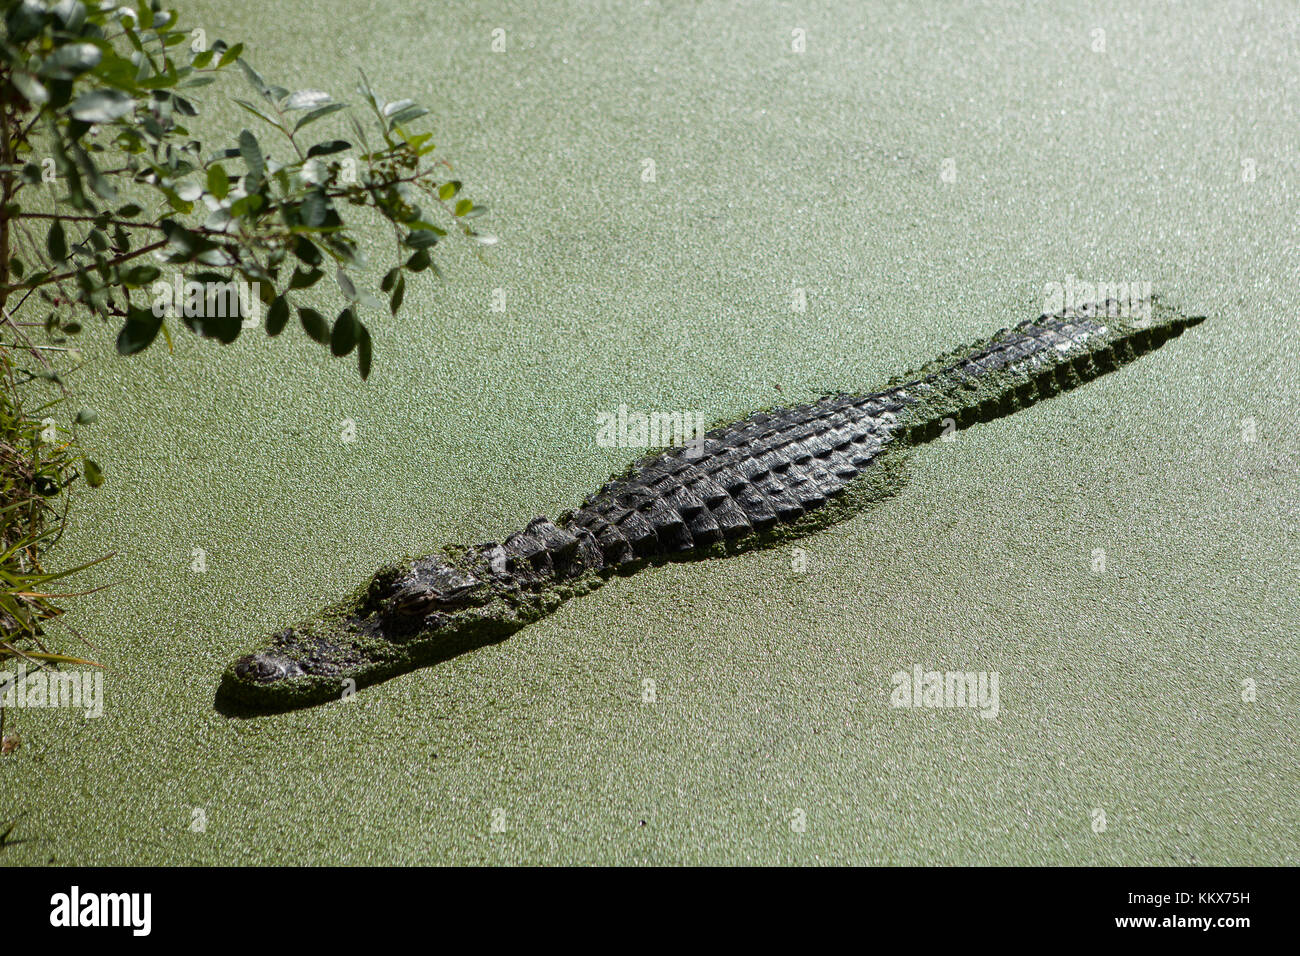 Alligators at Jungle Adventures Wildlife Park,Christmas, Florida Stock Photo